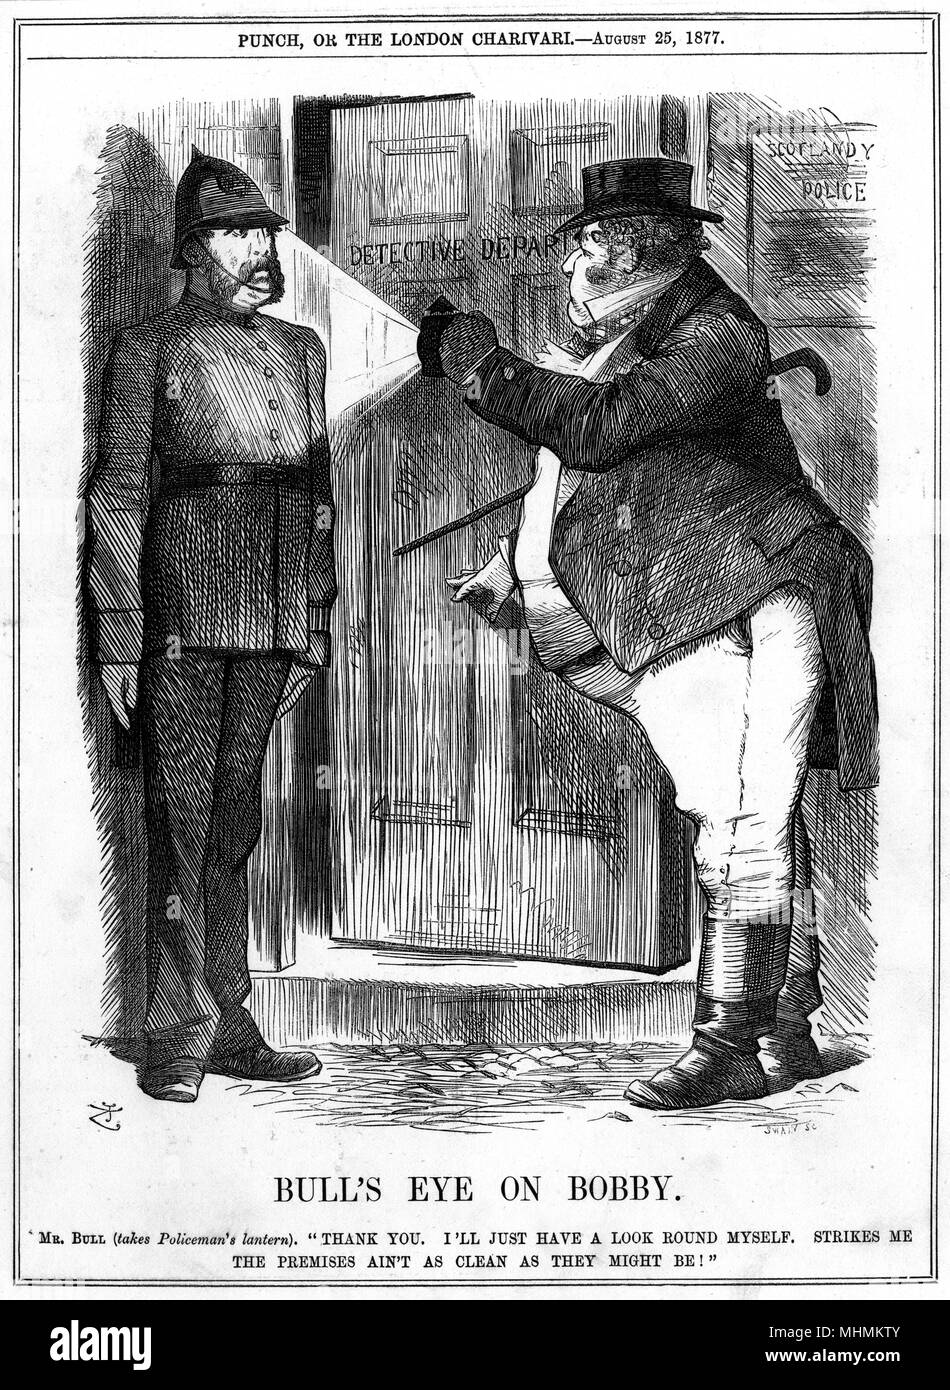 'Bull's eye on Bobby' John Bull suspects police corruption.      Date: 1877 Stock Photo